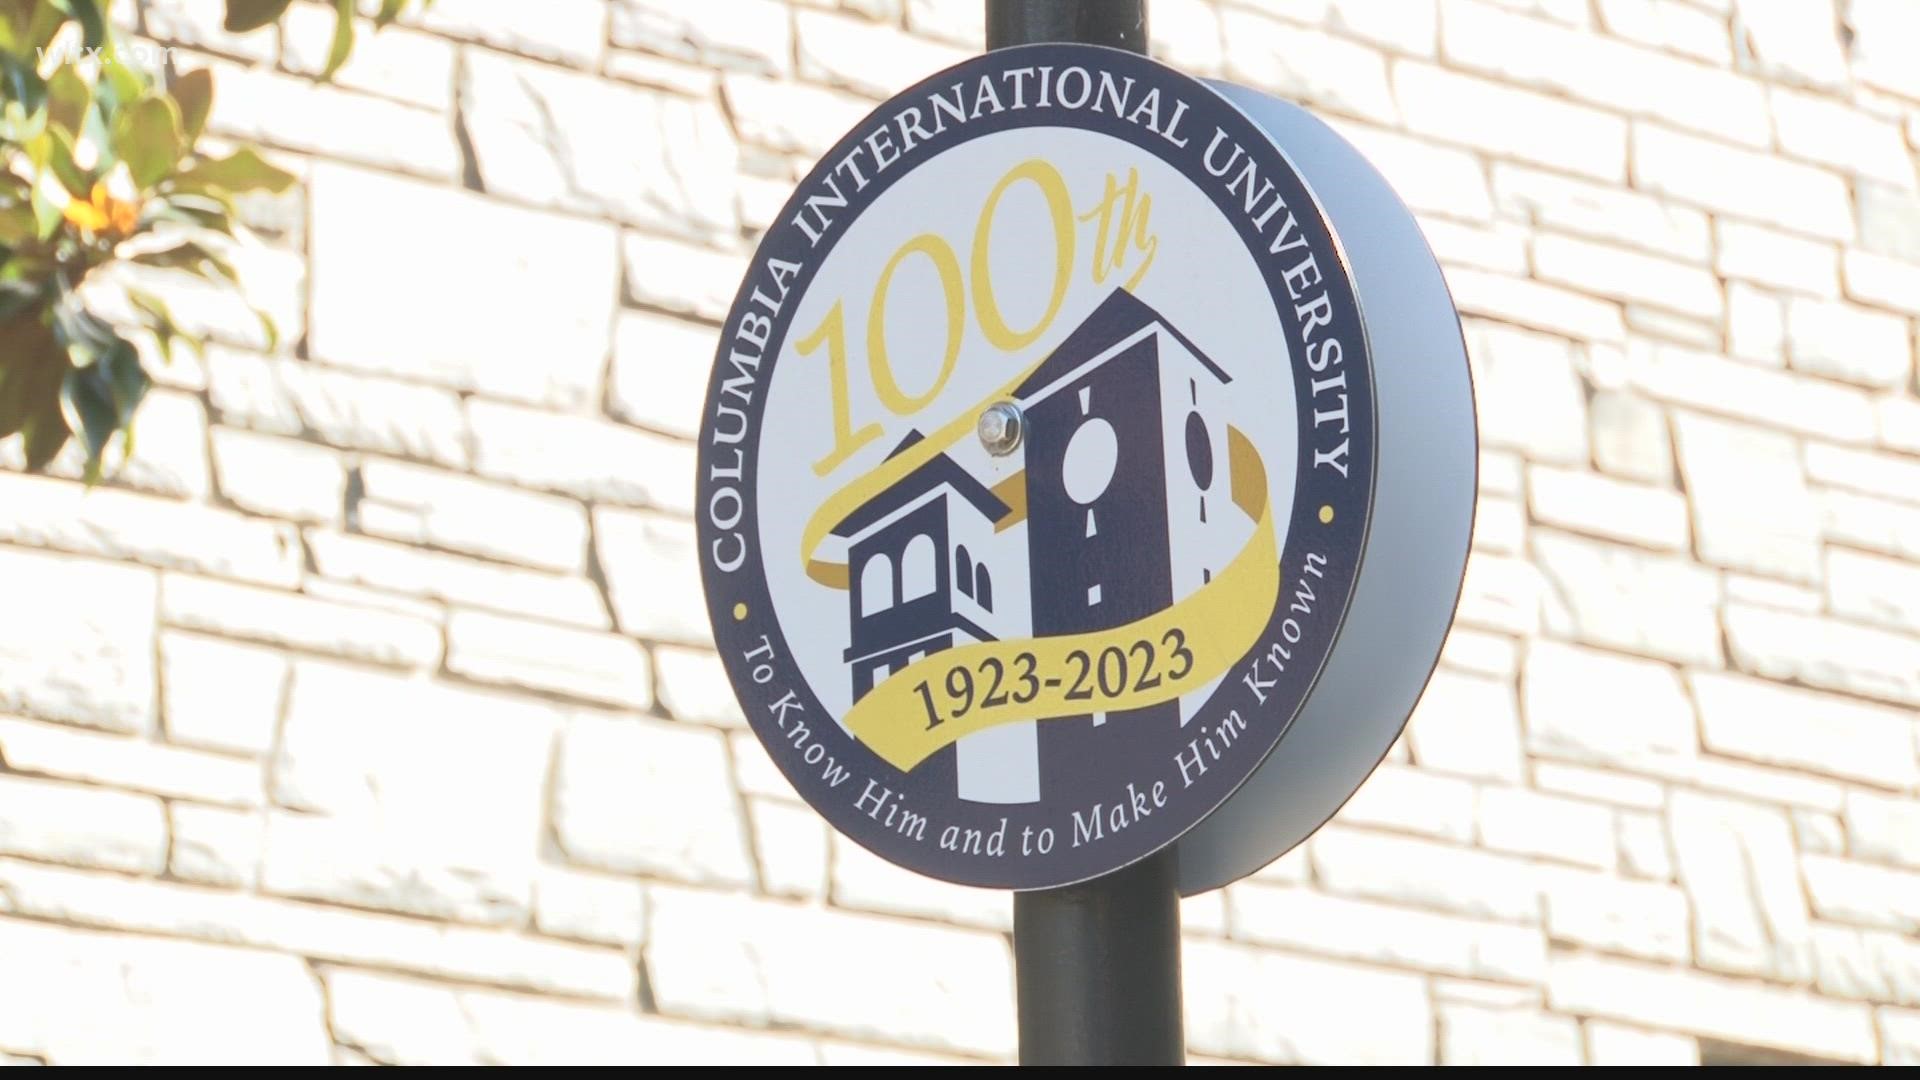 Columbia International University is celebrating 100 years of service.